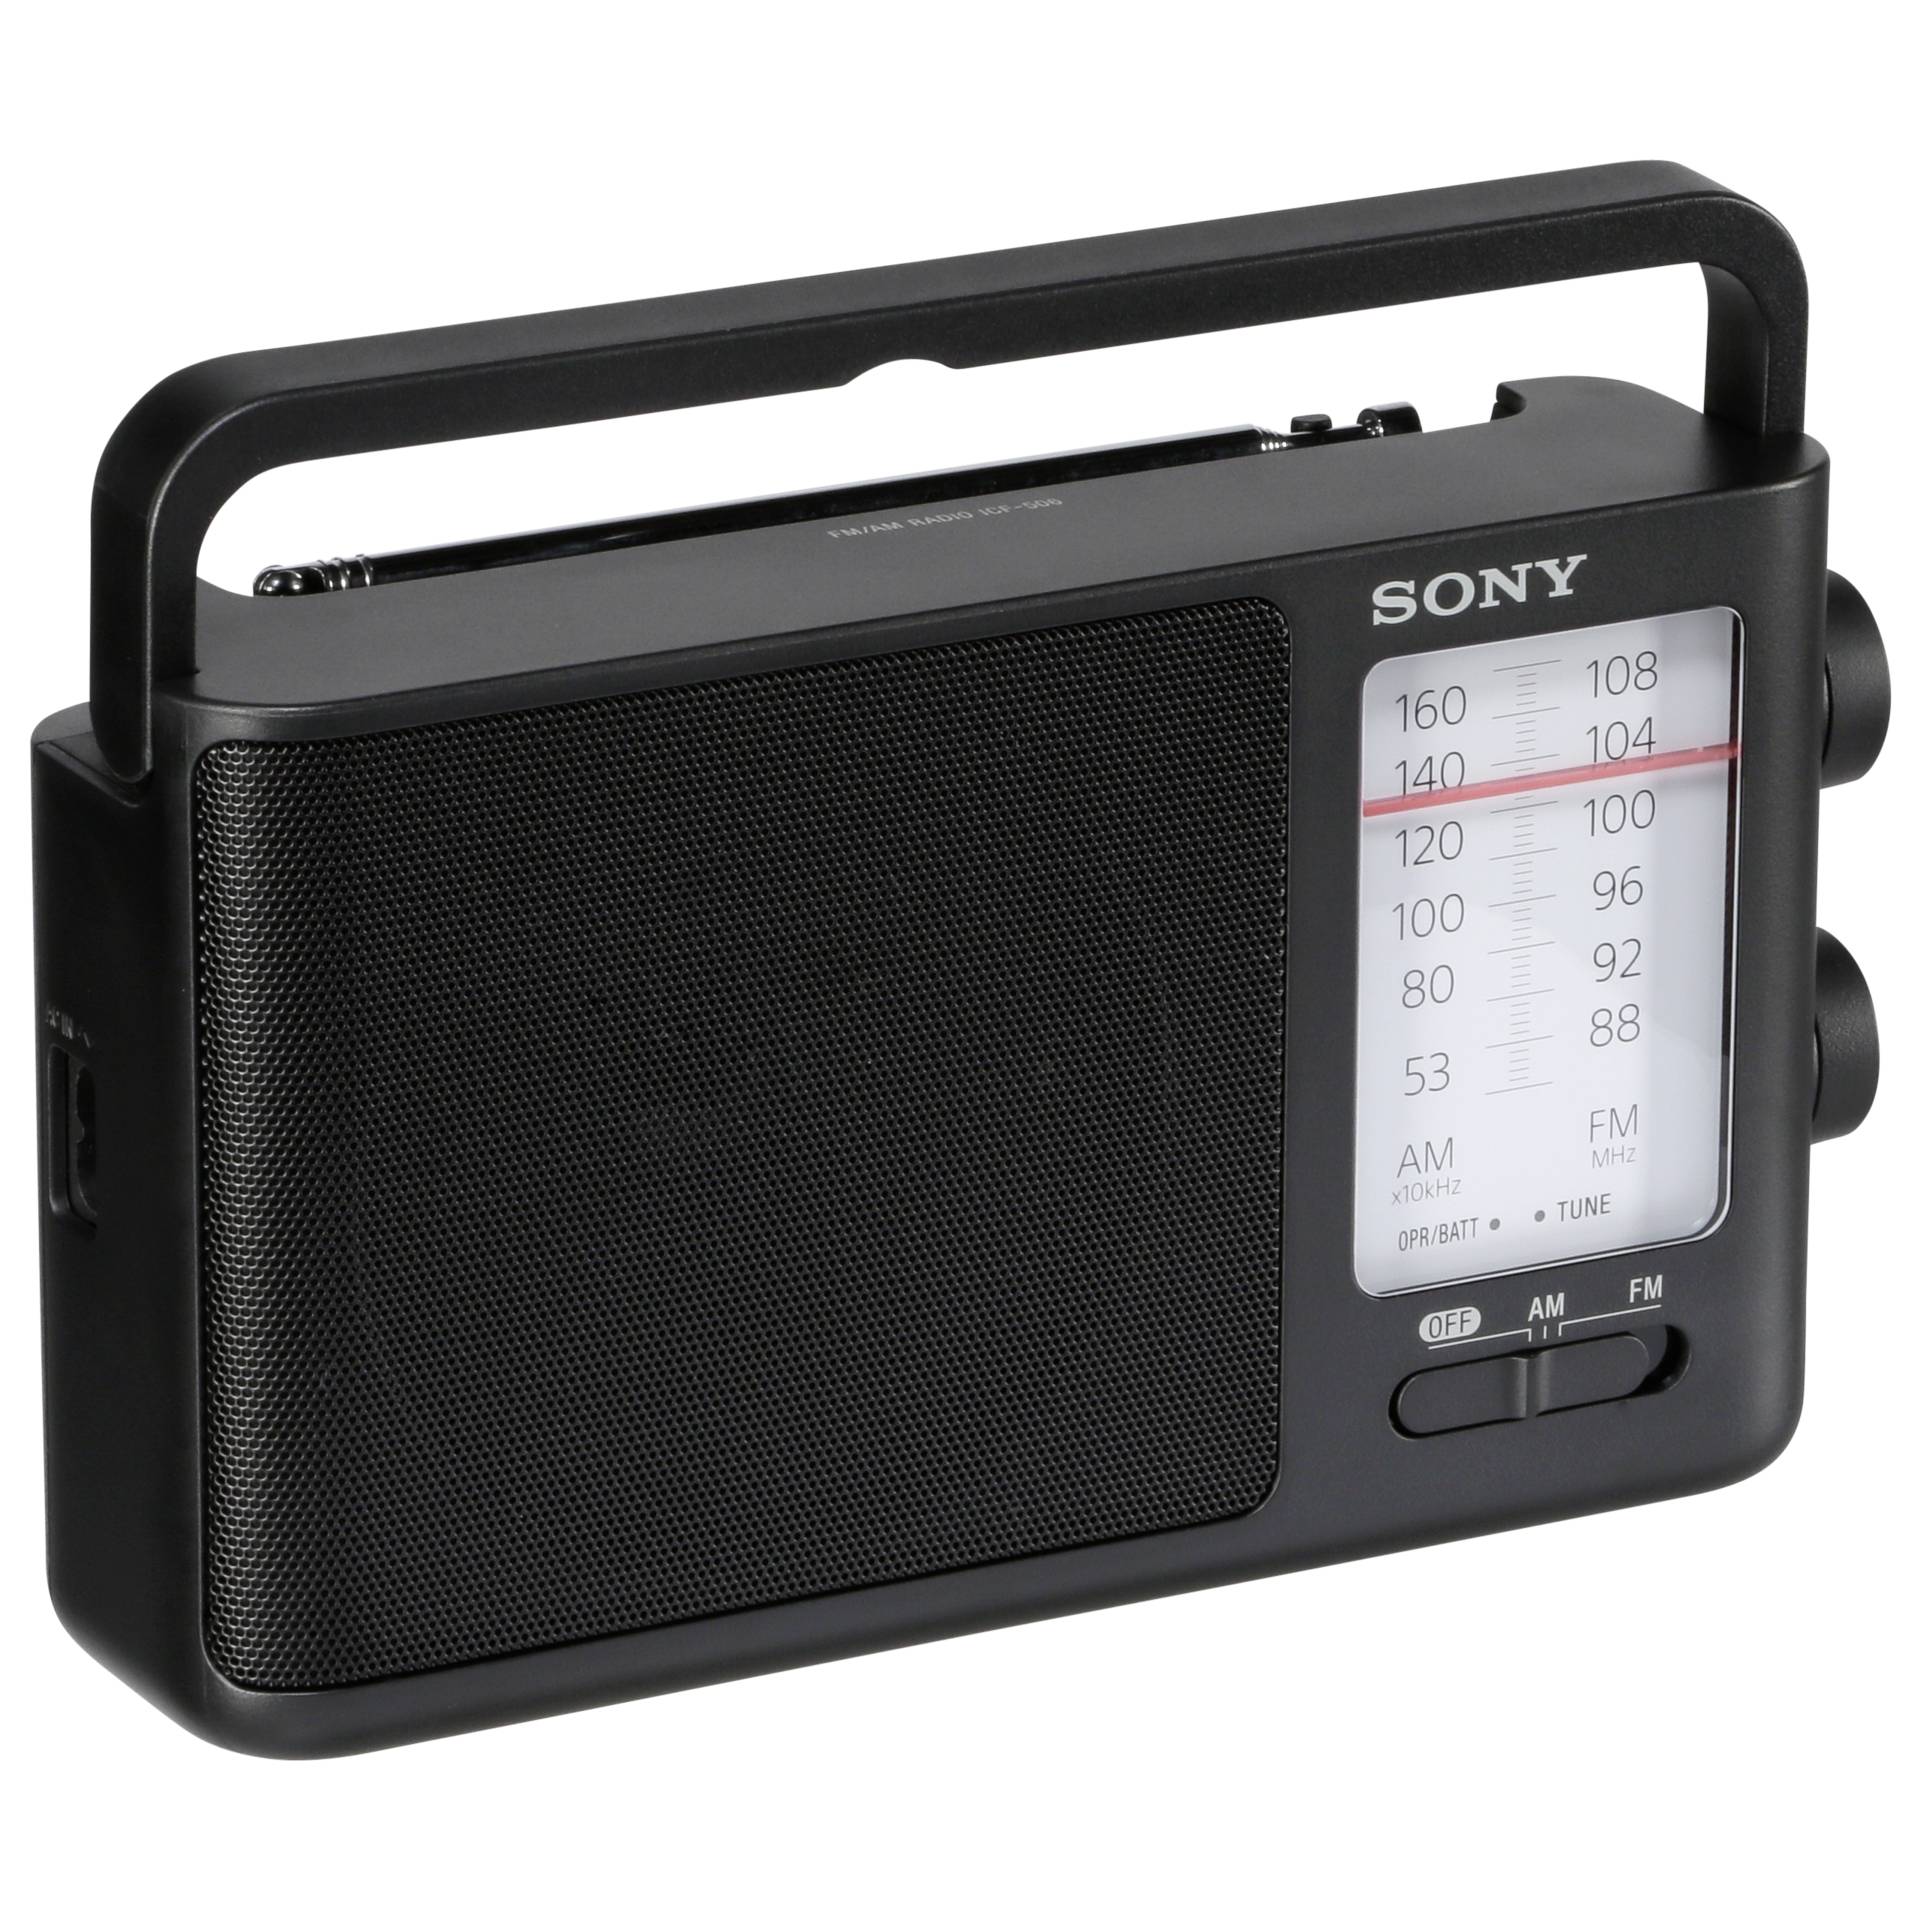 Sony Accessories -Radio -Sony ICF-506